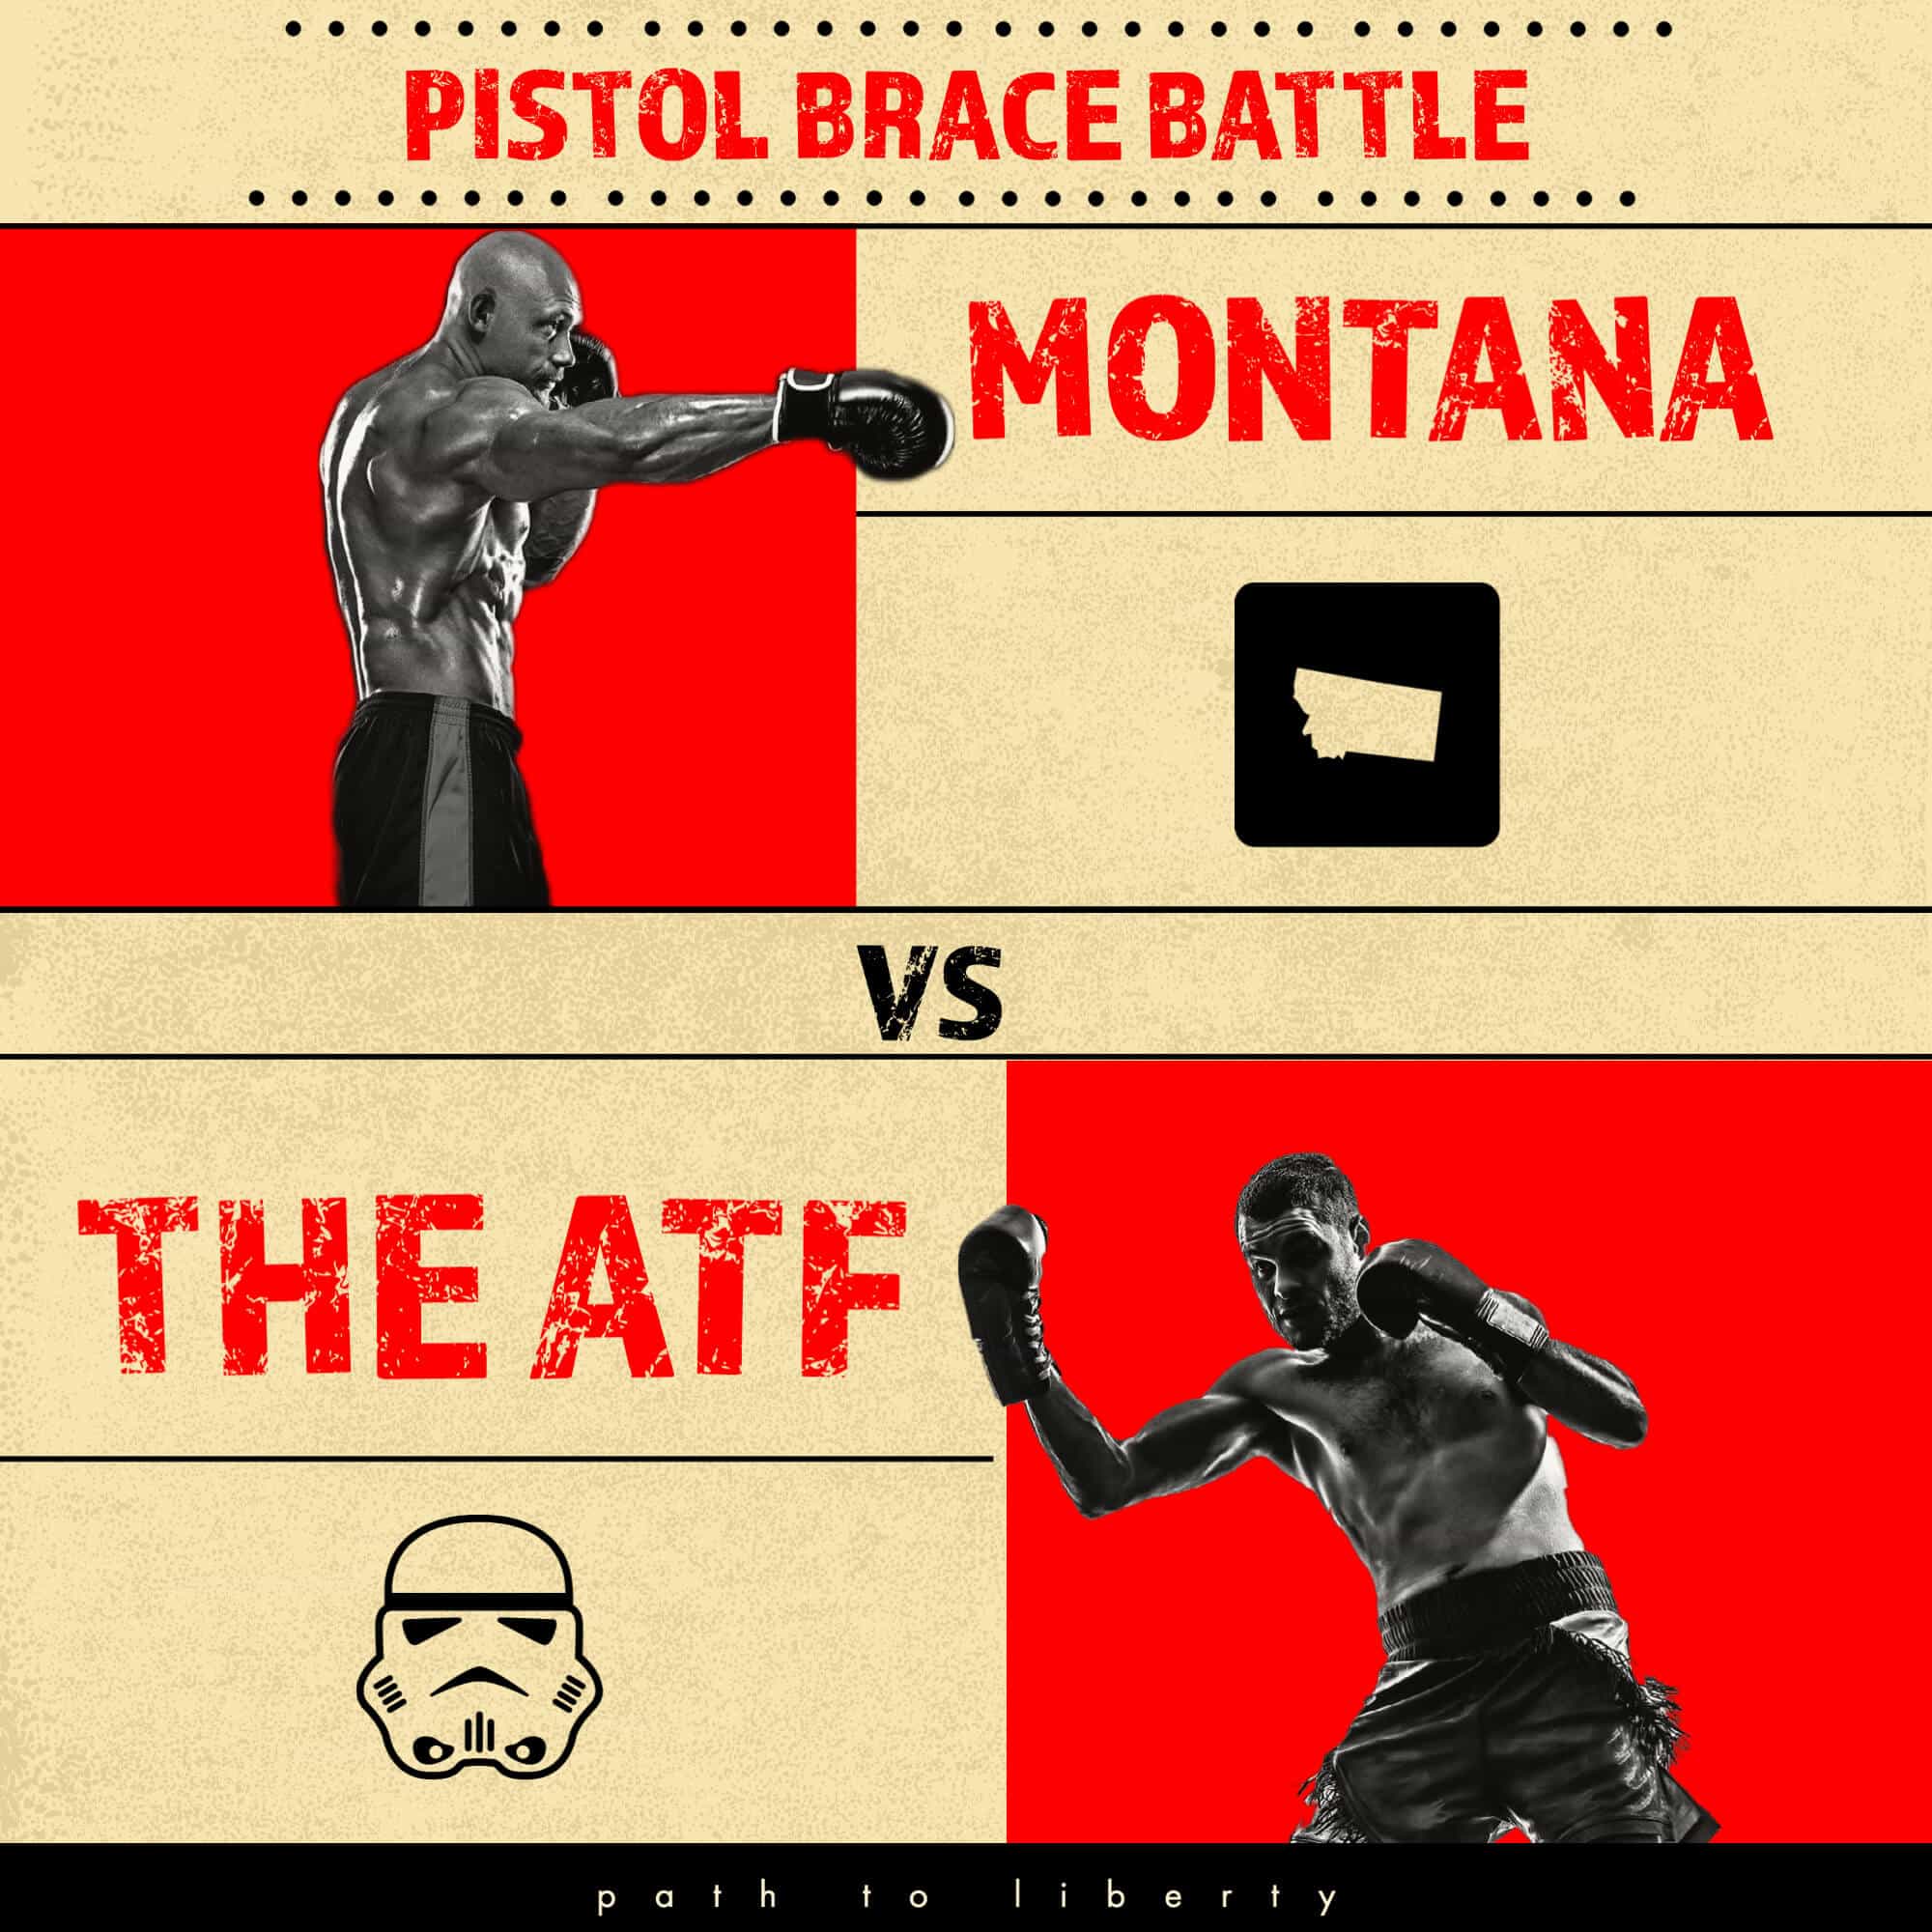 Montana vs ATF: No Enforcement of Pistol Brace Rule